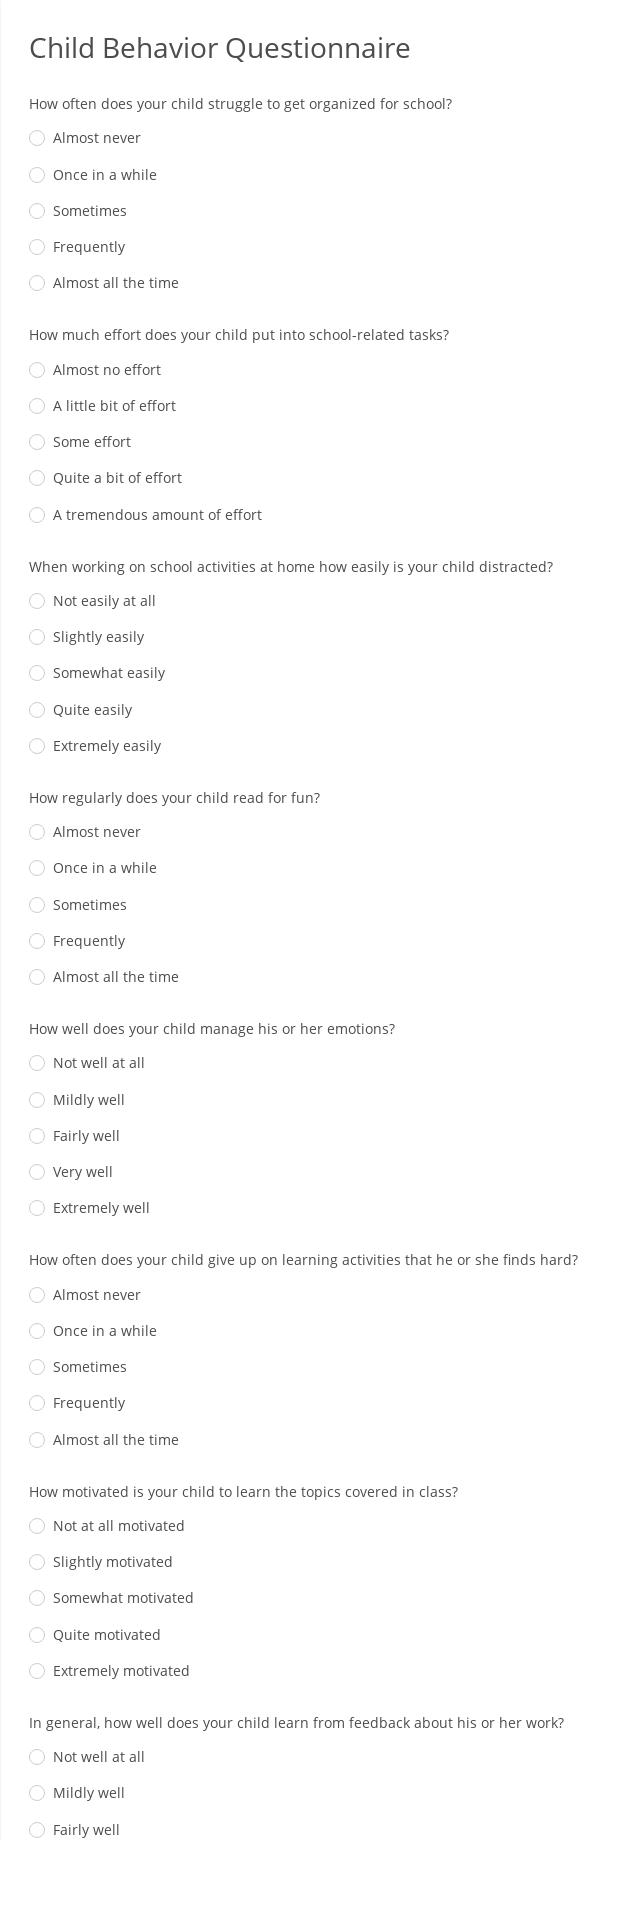 Child Behavior Questionnaire